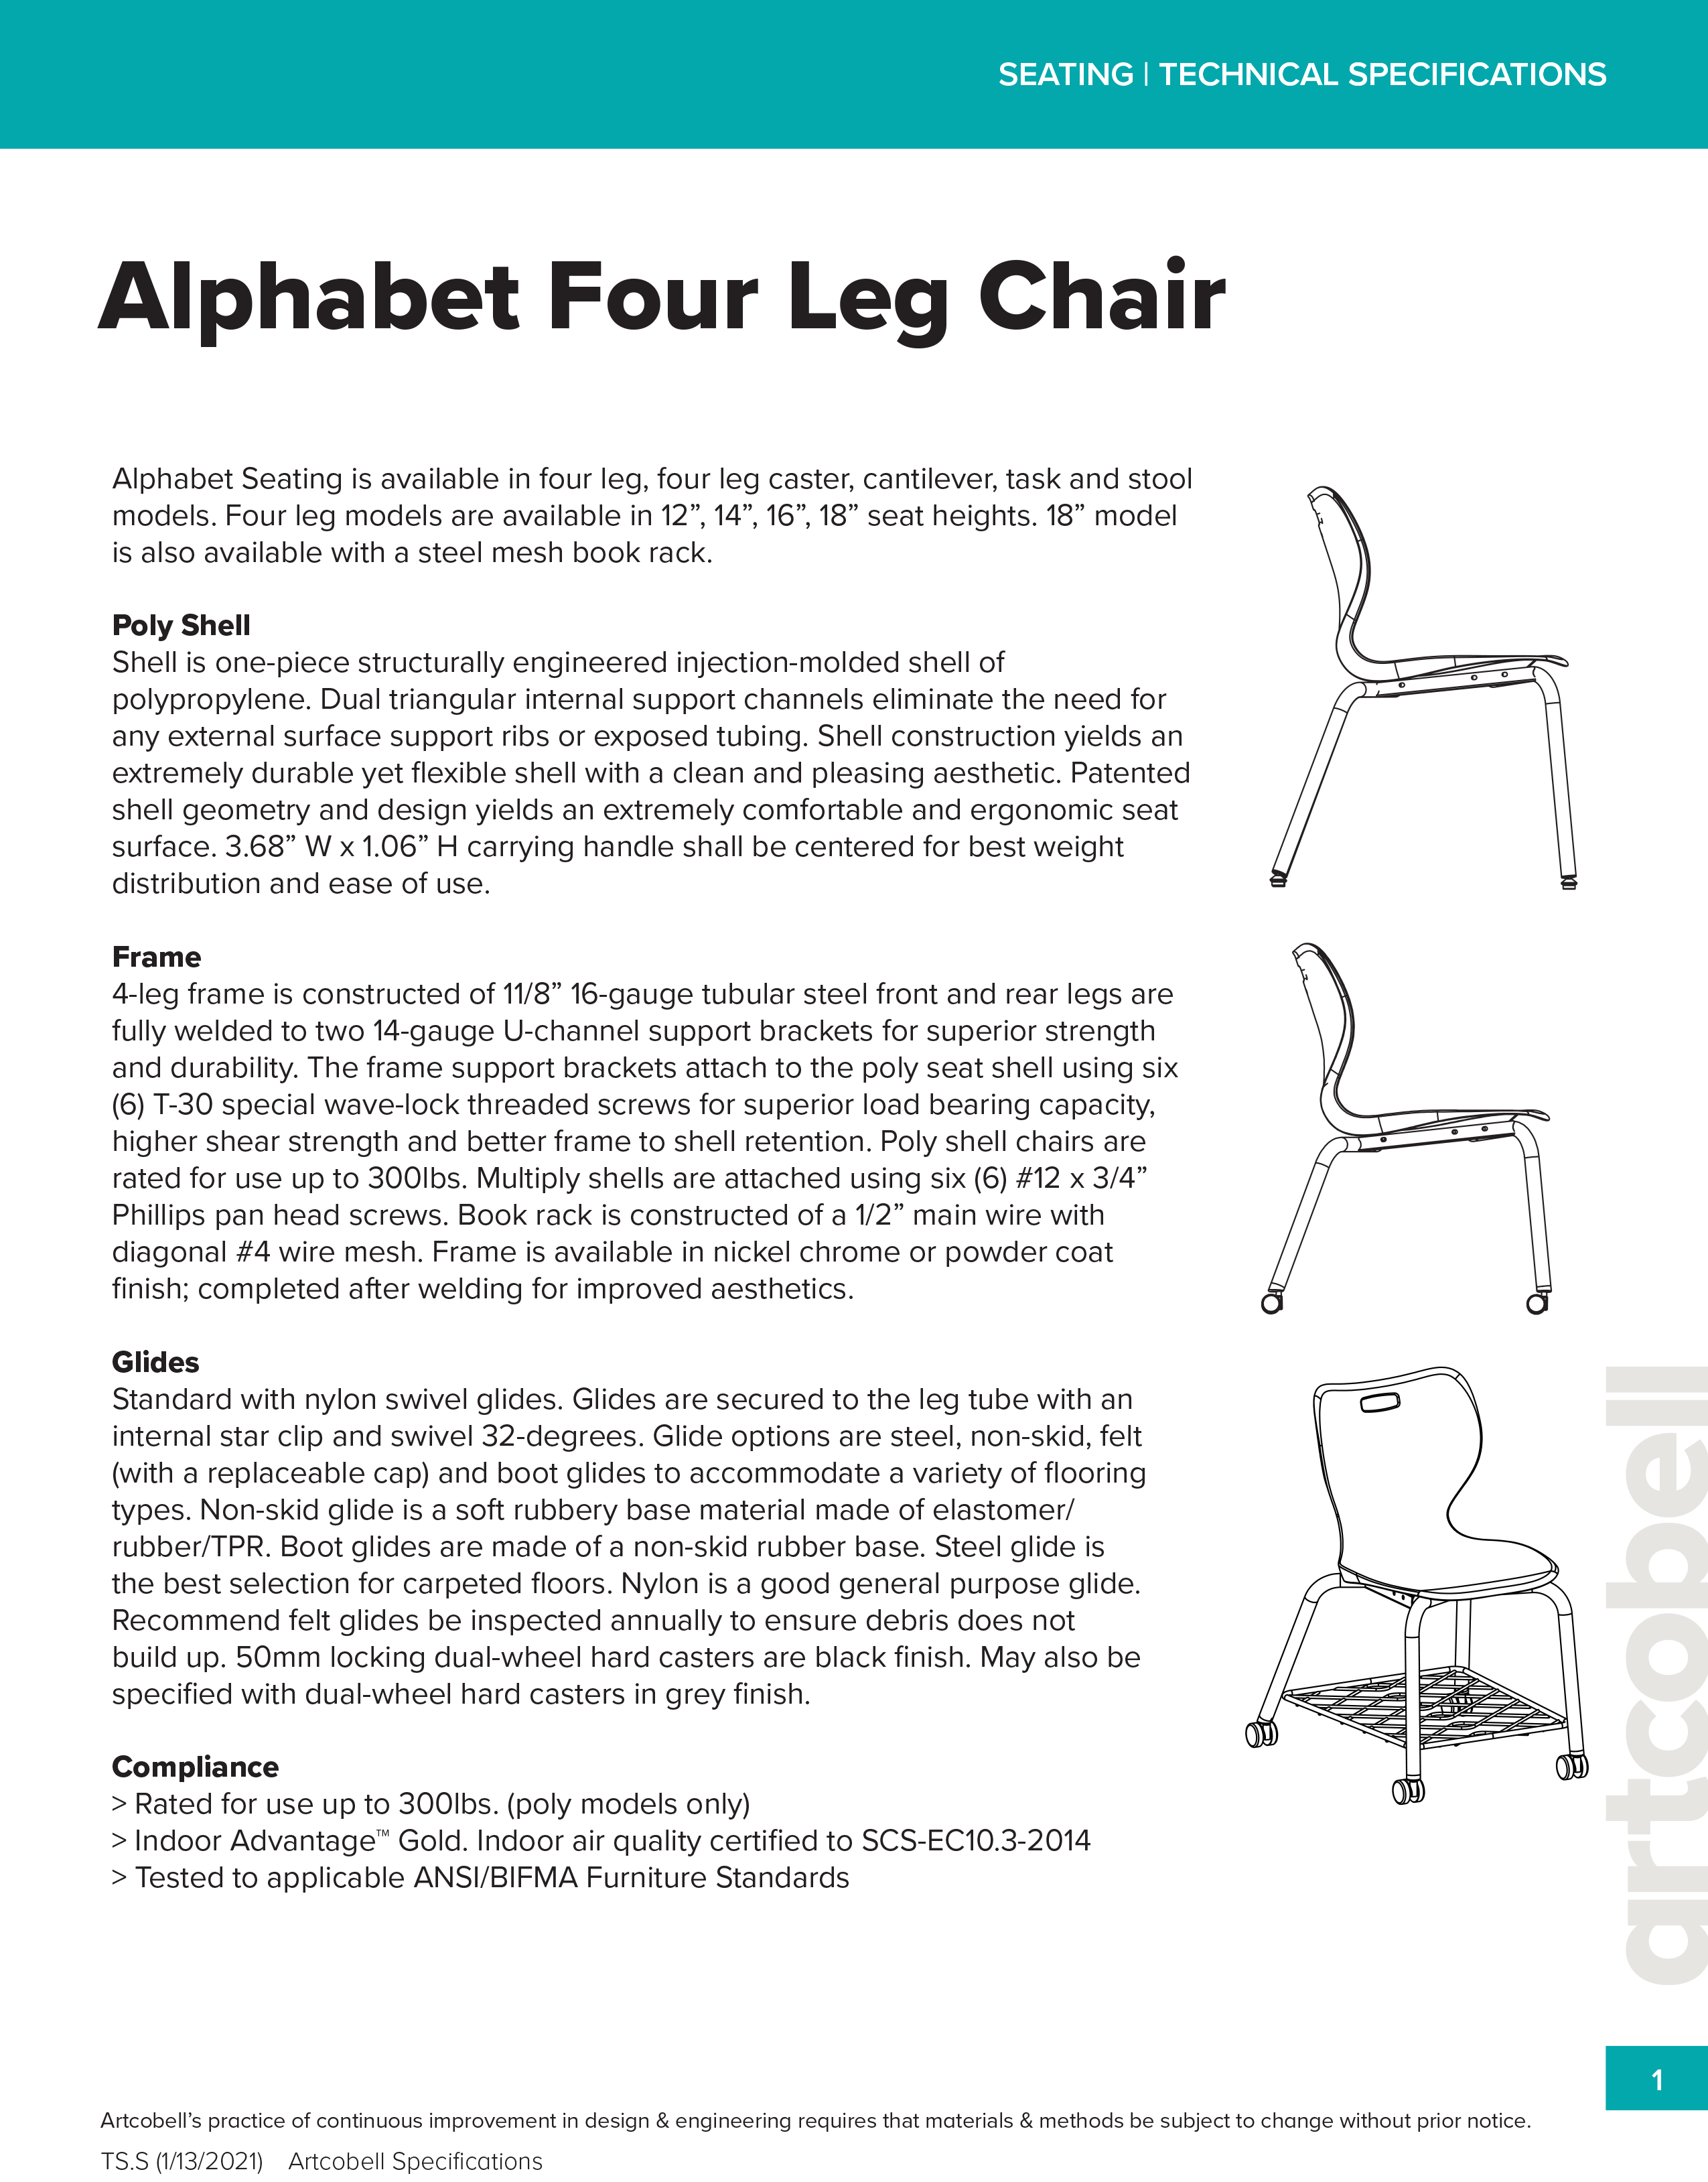 SeatingSpecifications_Alphabet_FourLeg Chair